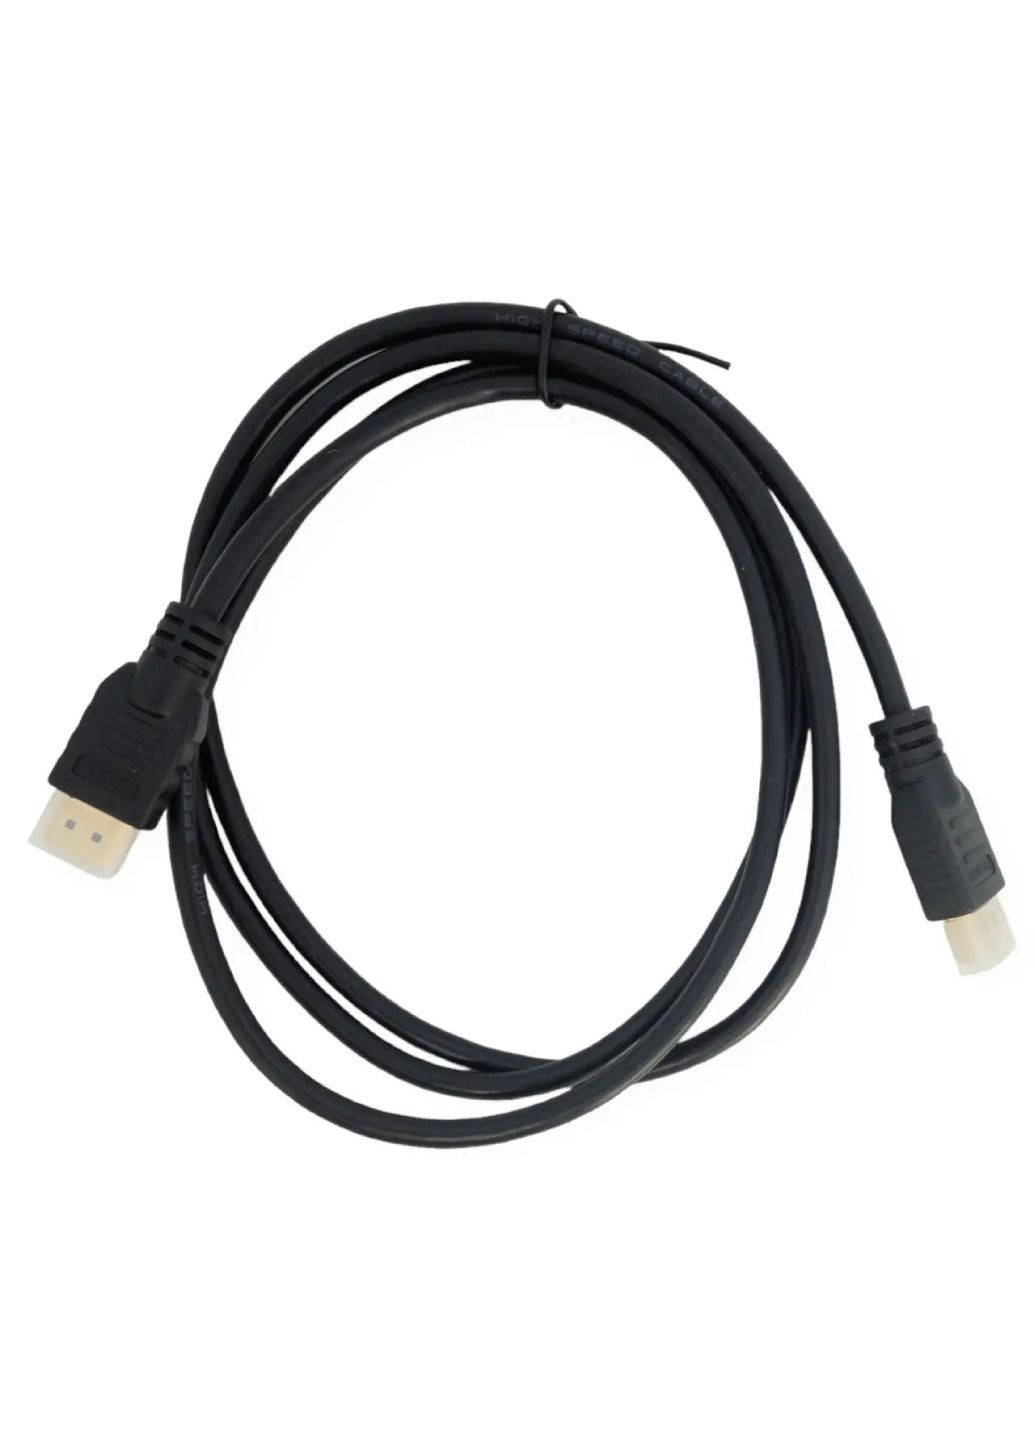 HDMI кабель шнур позолота медь для TV DVD SAT черный 1.5 метра HDMI to HDMI No Brand (260715580)